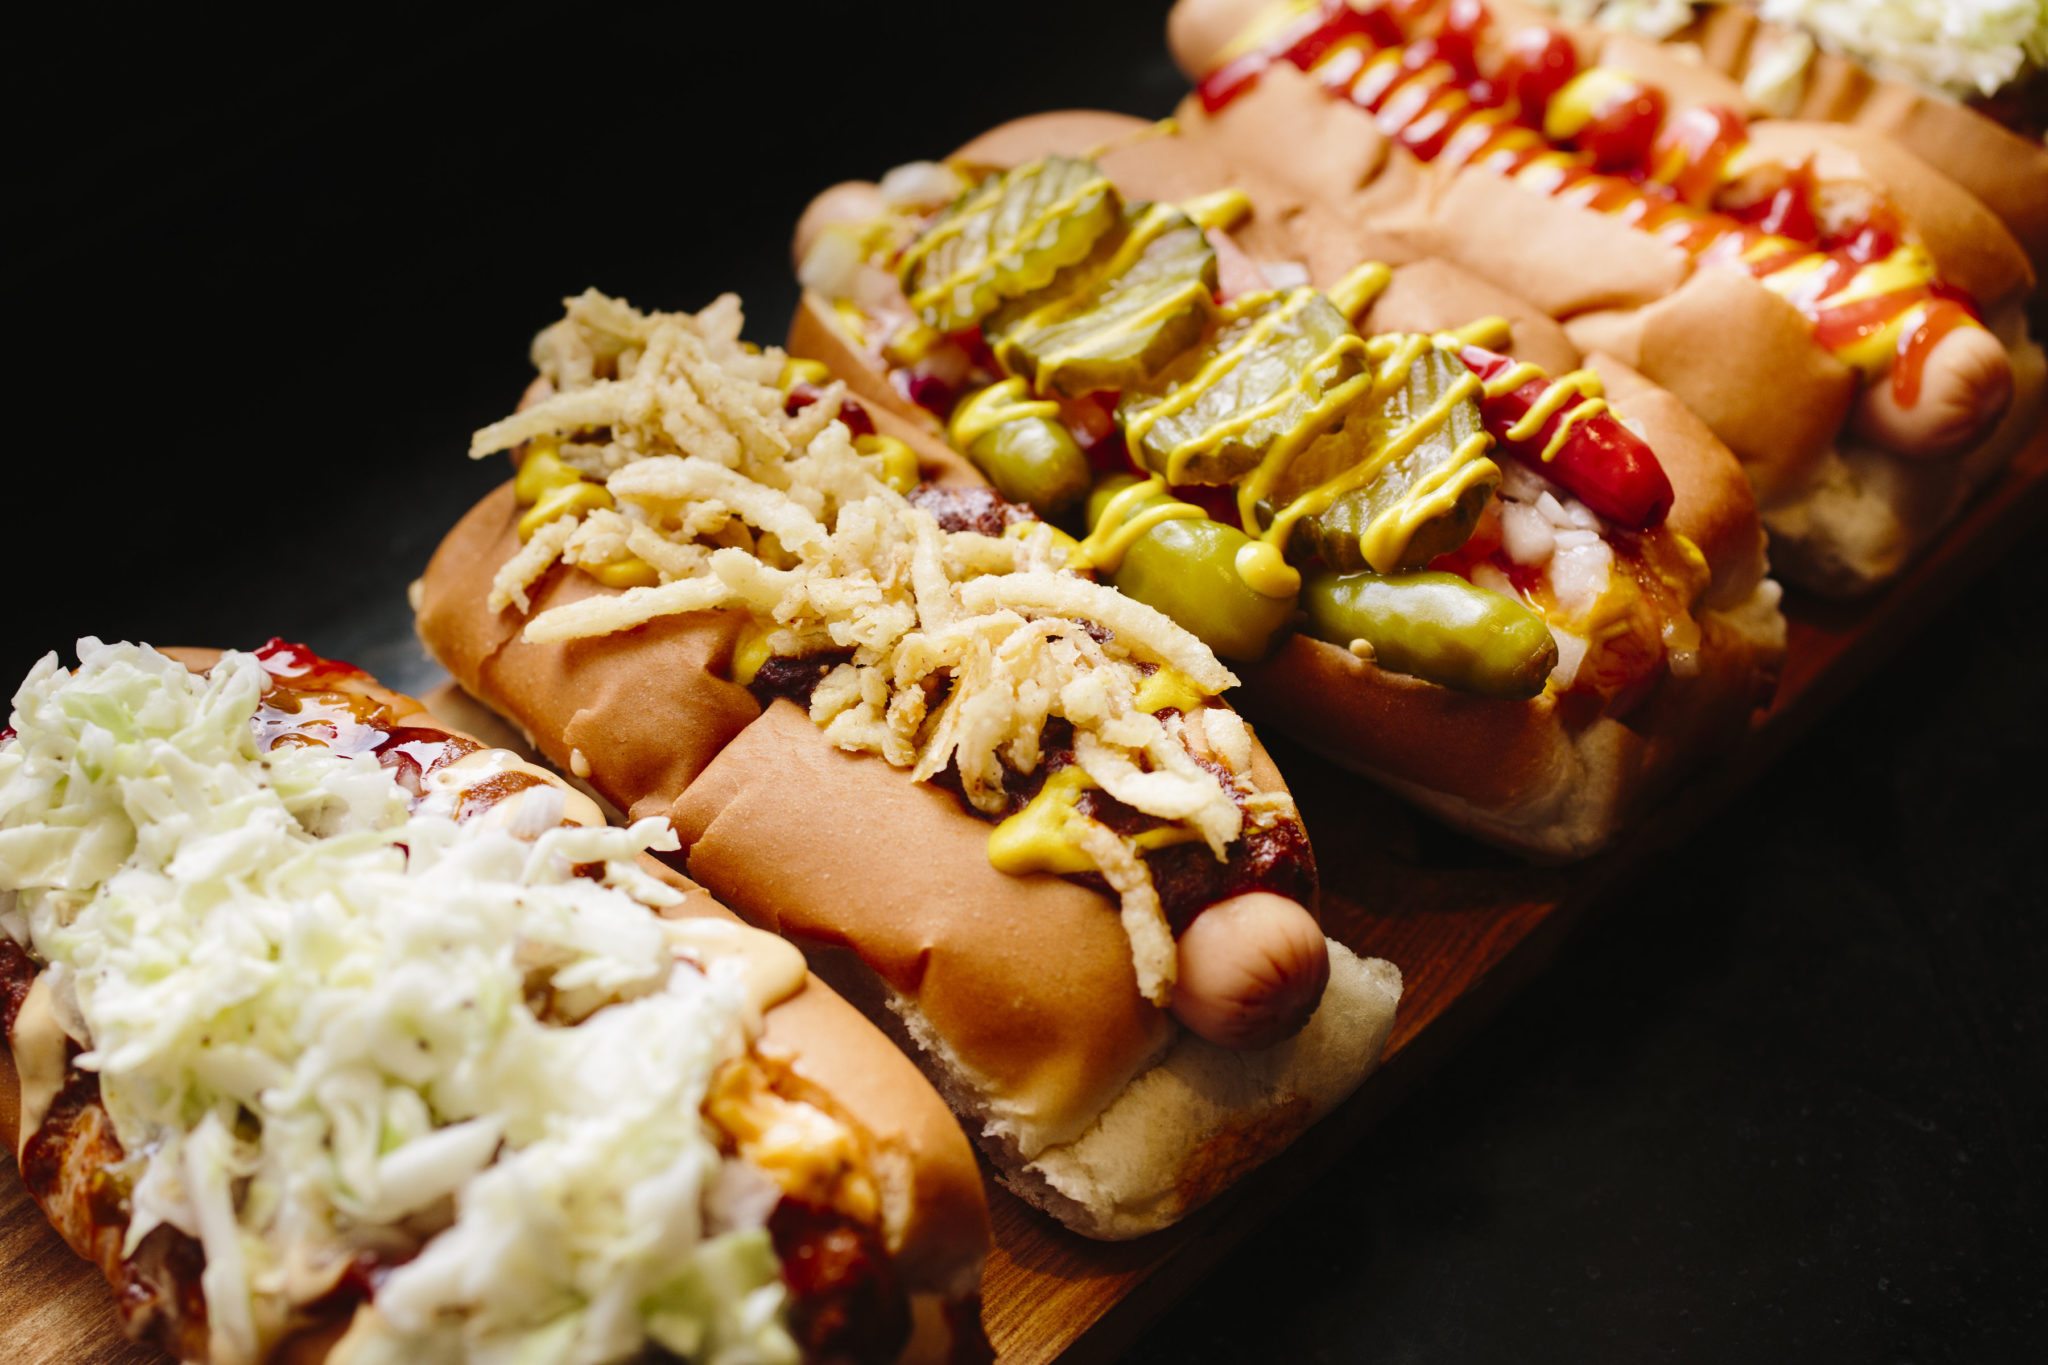 Best Hot Dogs in Myrtle Beach